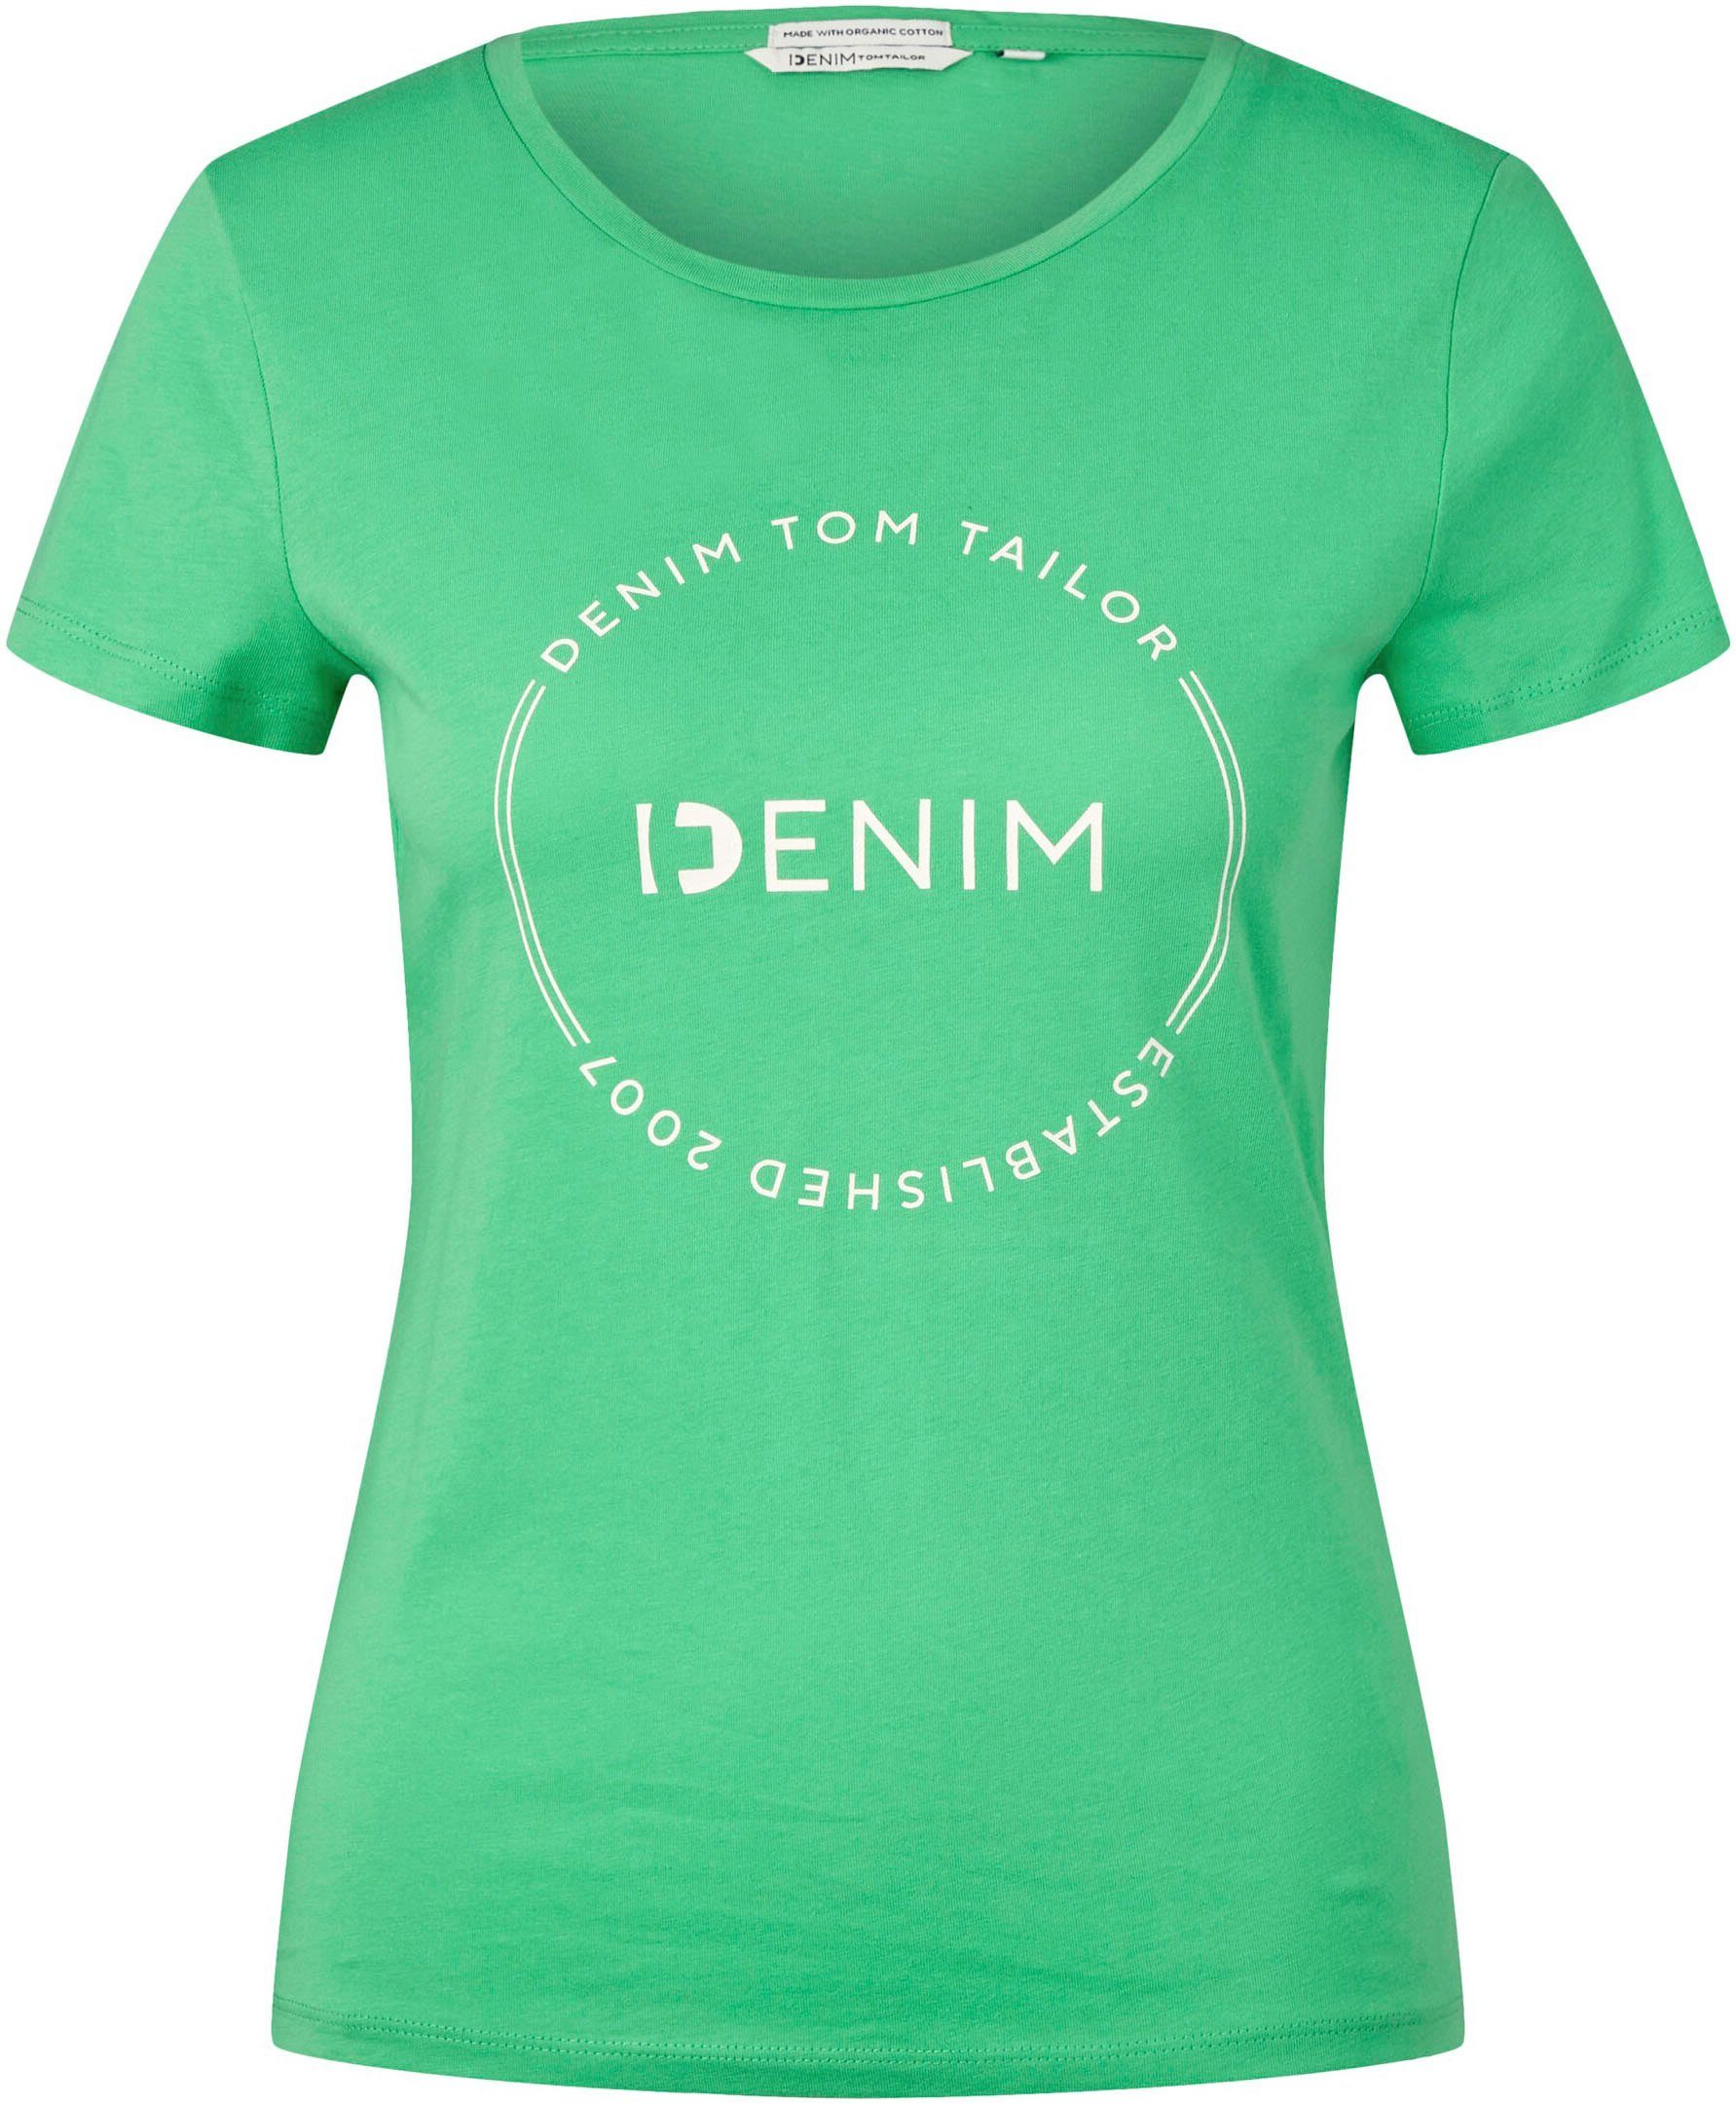 TOM grün T-Shirt TAILOR Denim